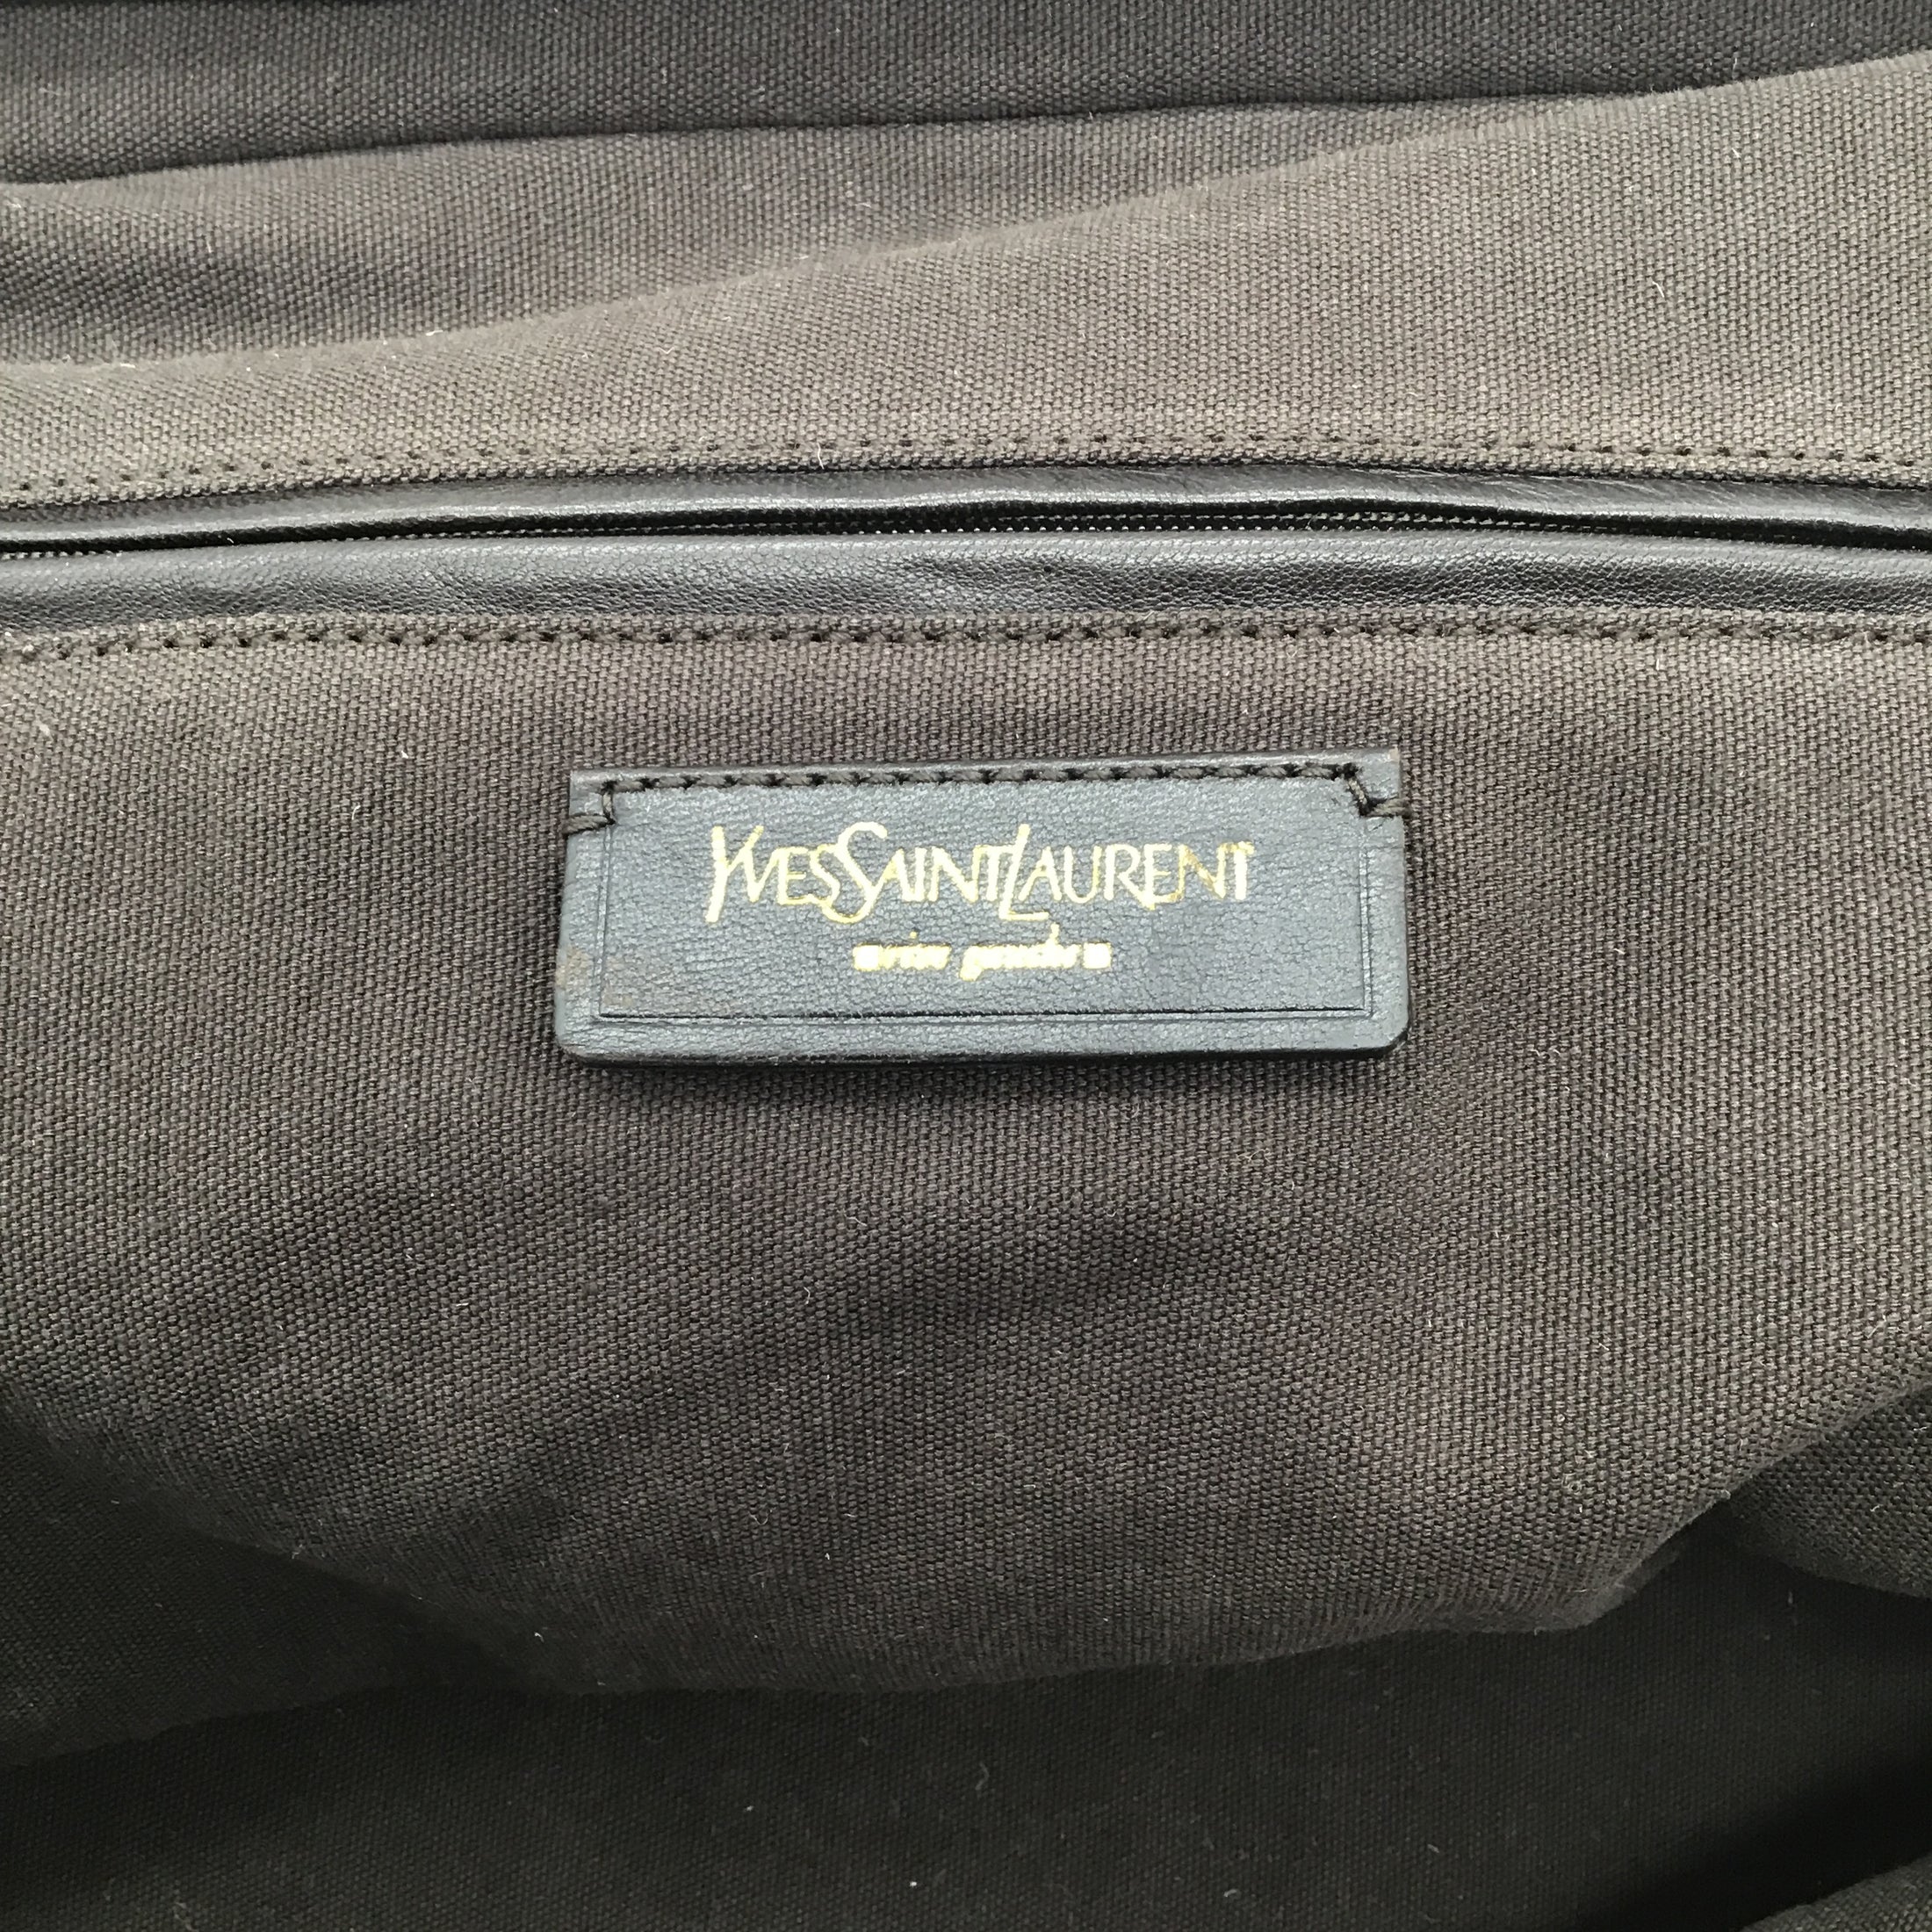 Yves Saint Laurent Gold Metallic Leather Medium Majorelle Shoulder Bag